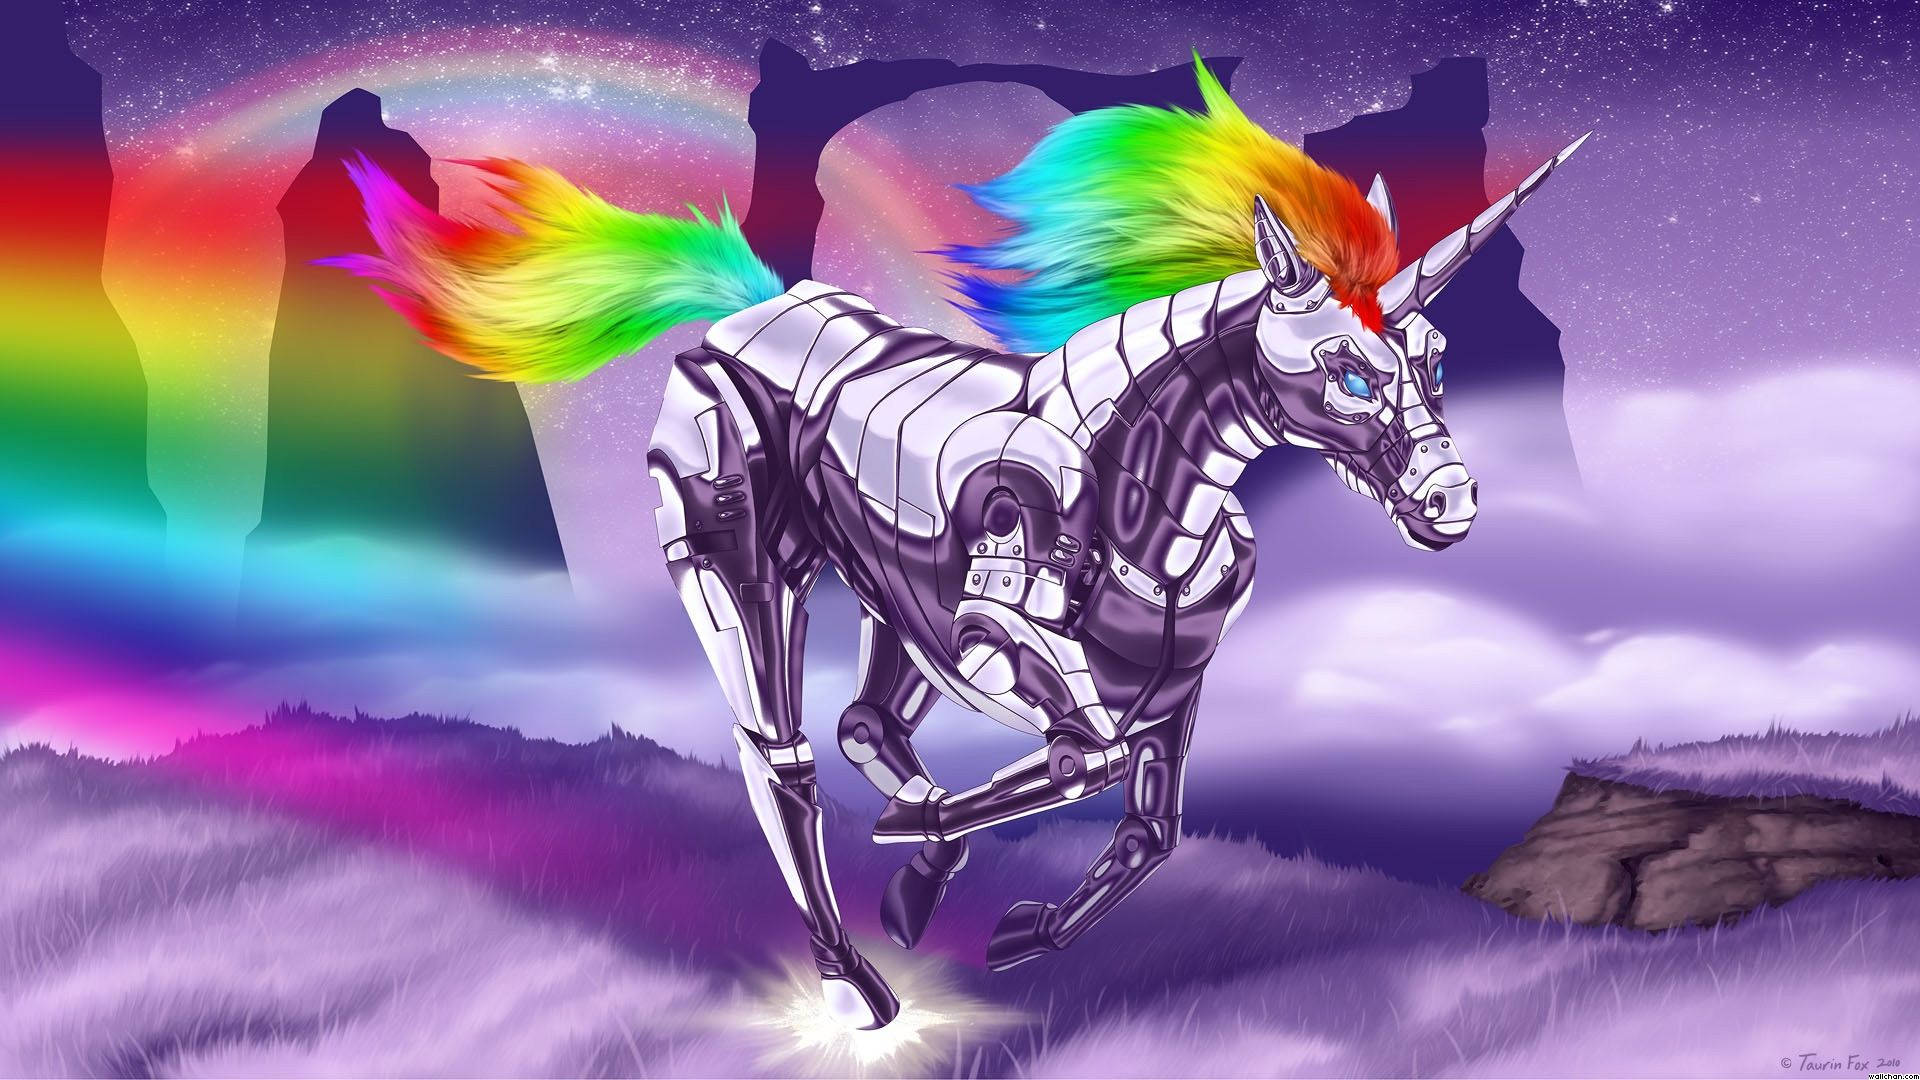 Caption: Majestic Metallic Rainbow Unicorn Wallpaper